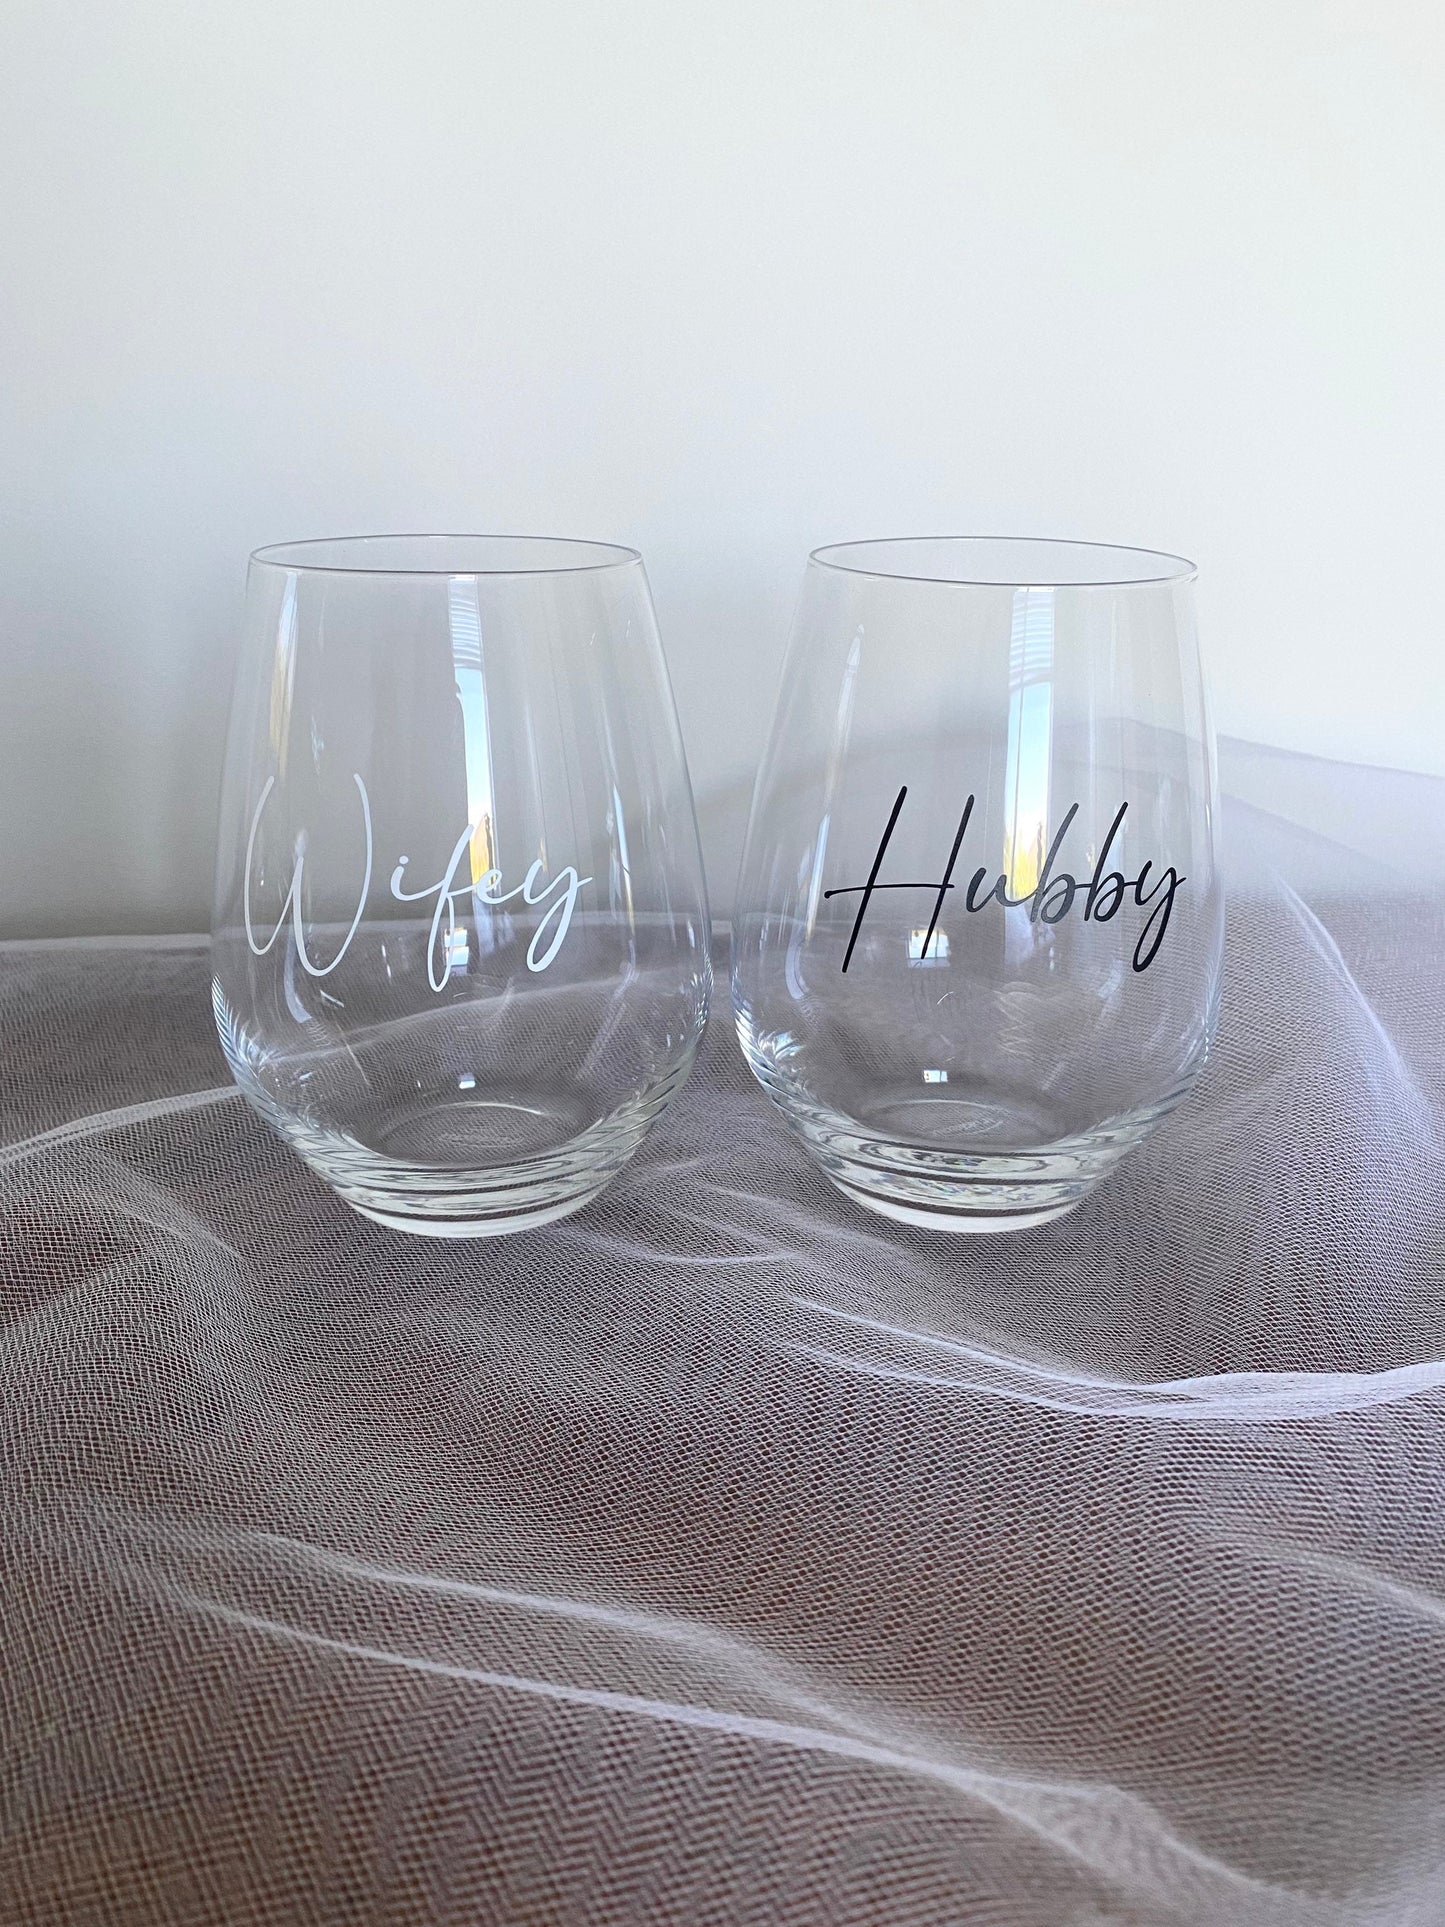 Personalized Wine Glass